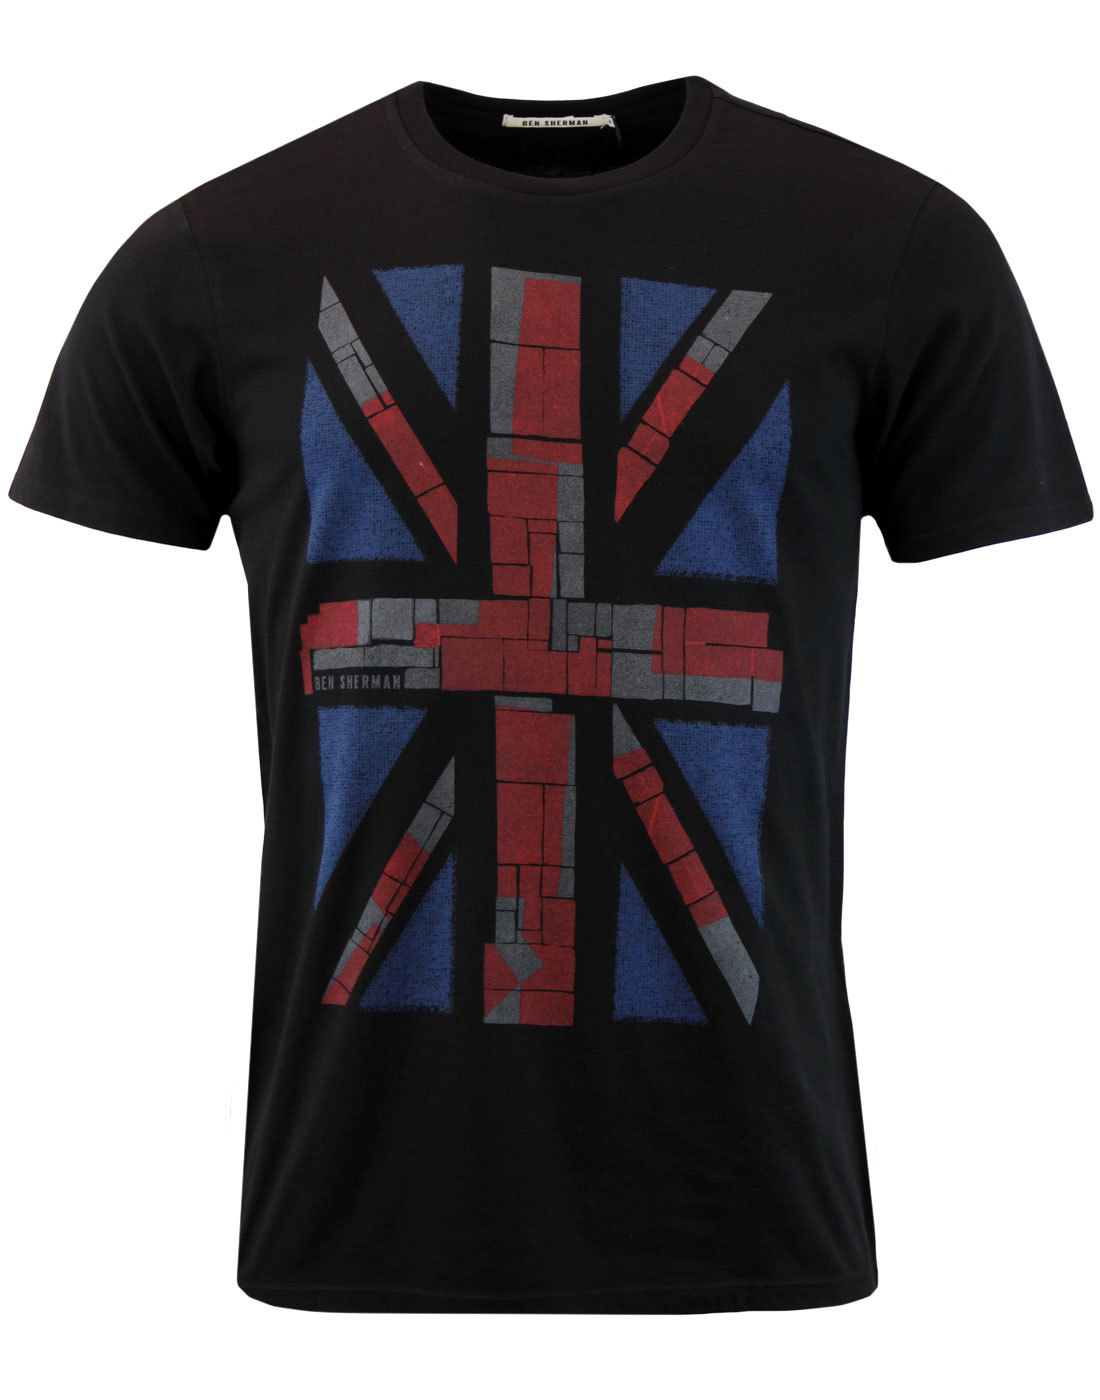 BEN SHERMAN Retro Mod Colour Block Union Jack T-Shirt in Black